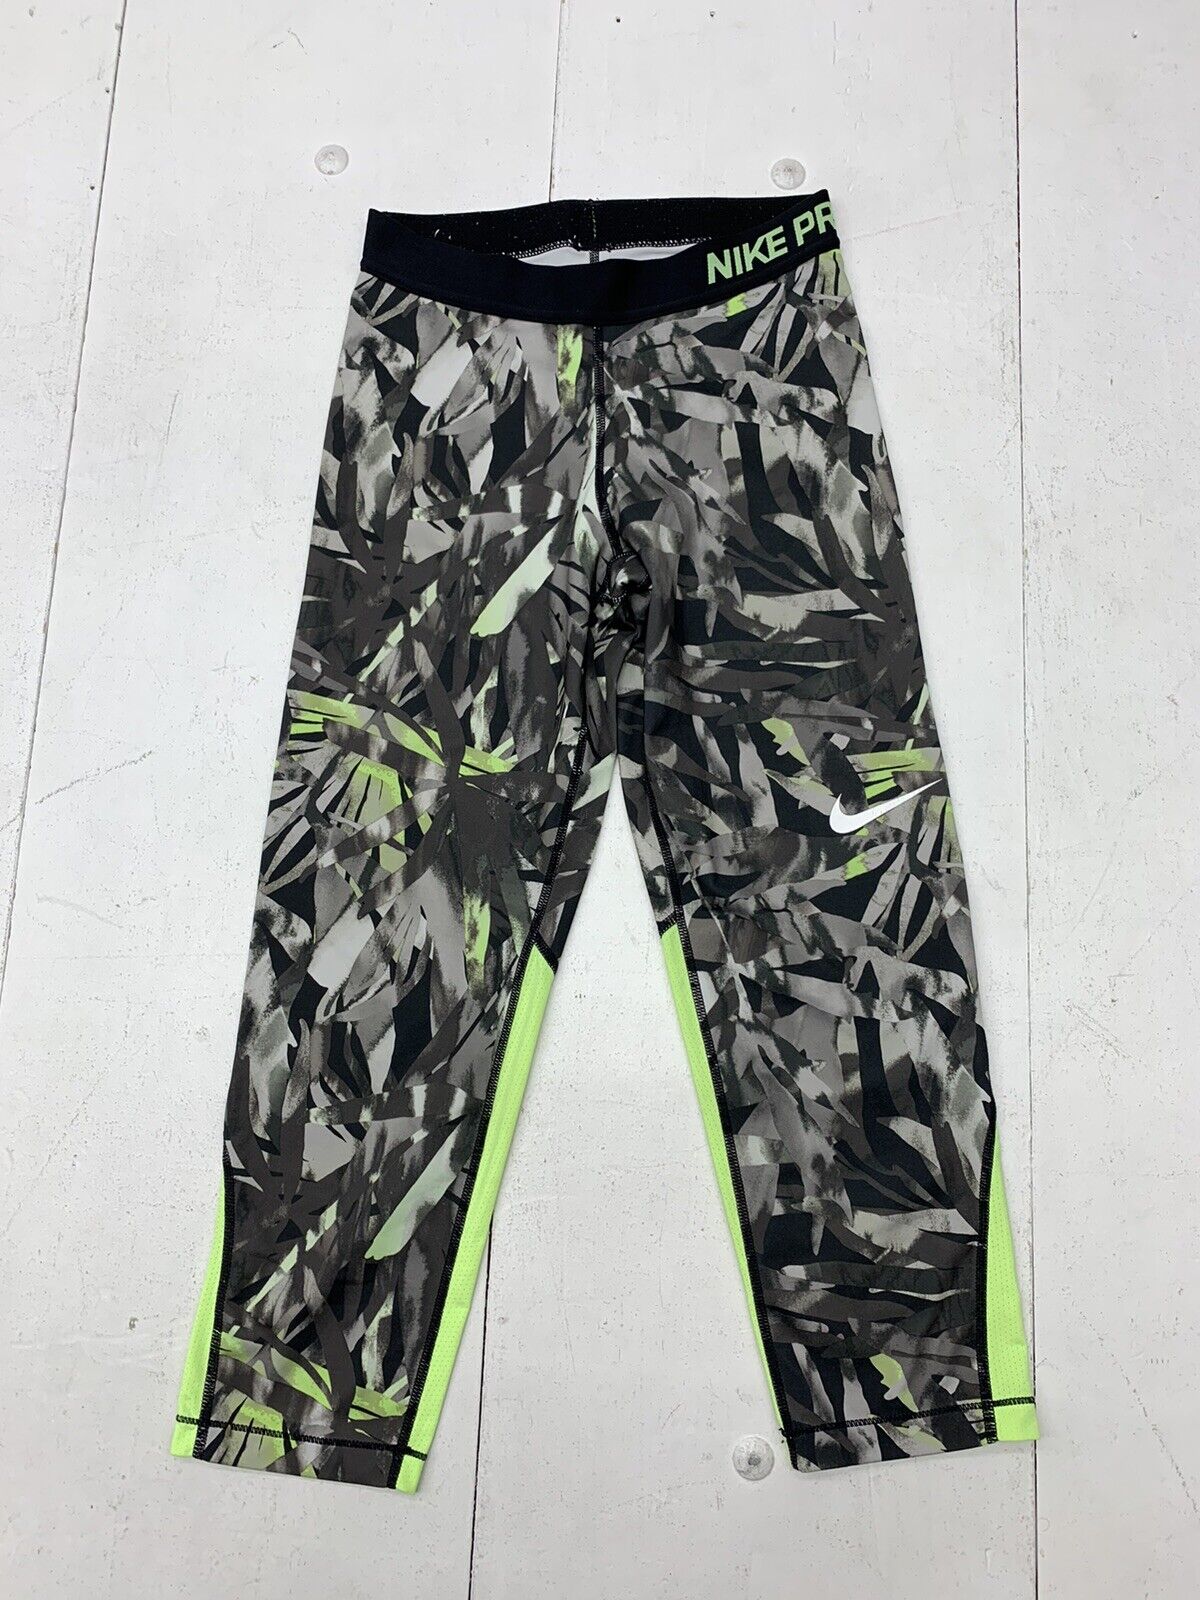 Nike Drifit Womens Green Gray Geometric Print Athletic Leggings Size Small